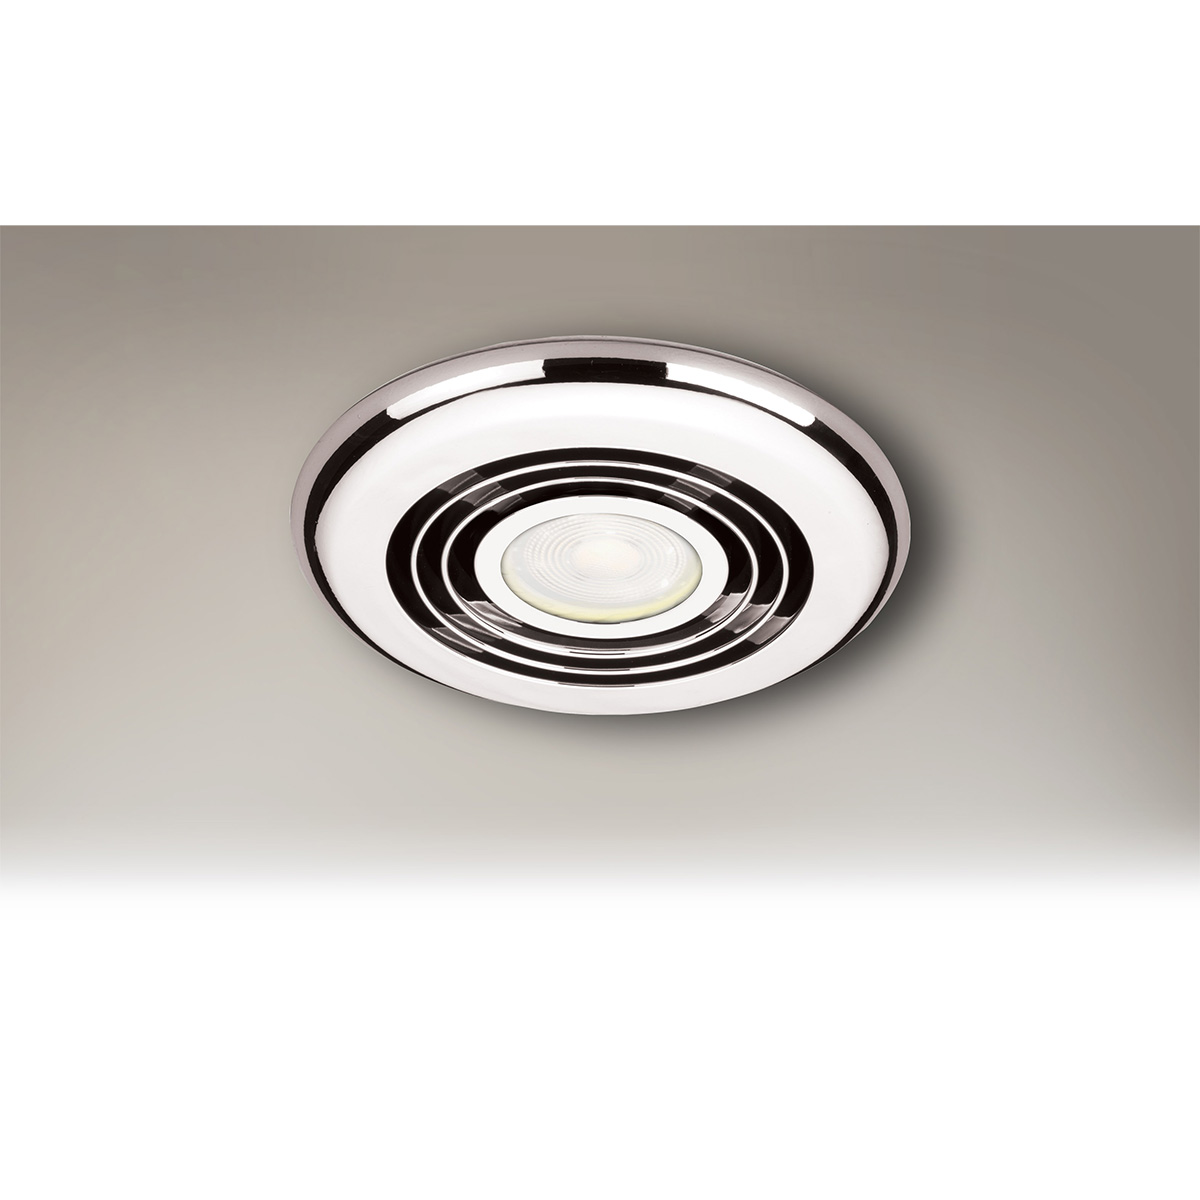 Flux Wet Room Inline Fan in Chrome - Cool White LED